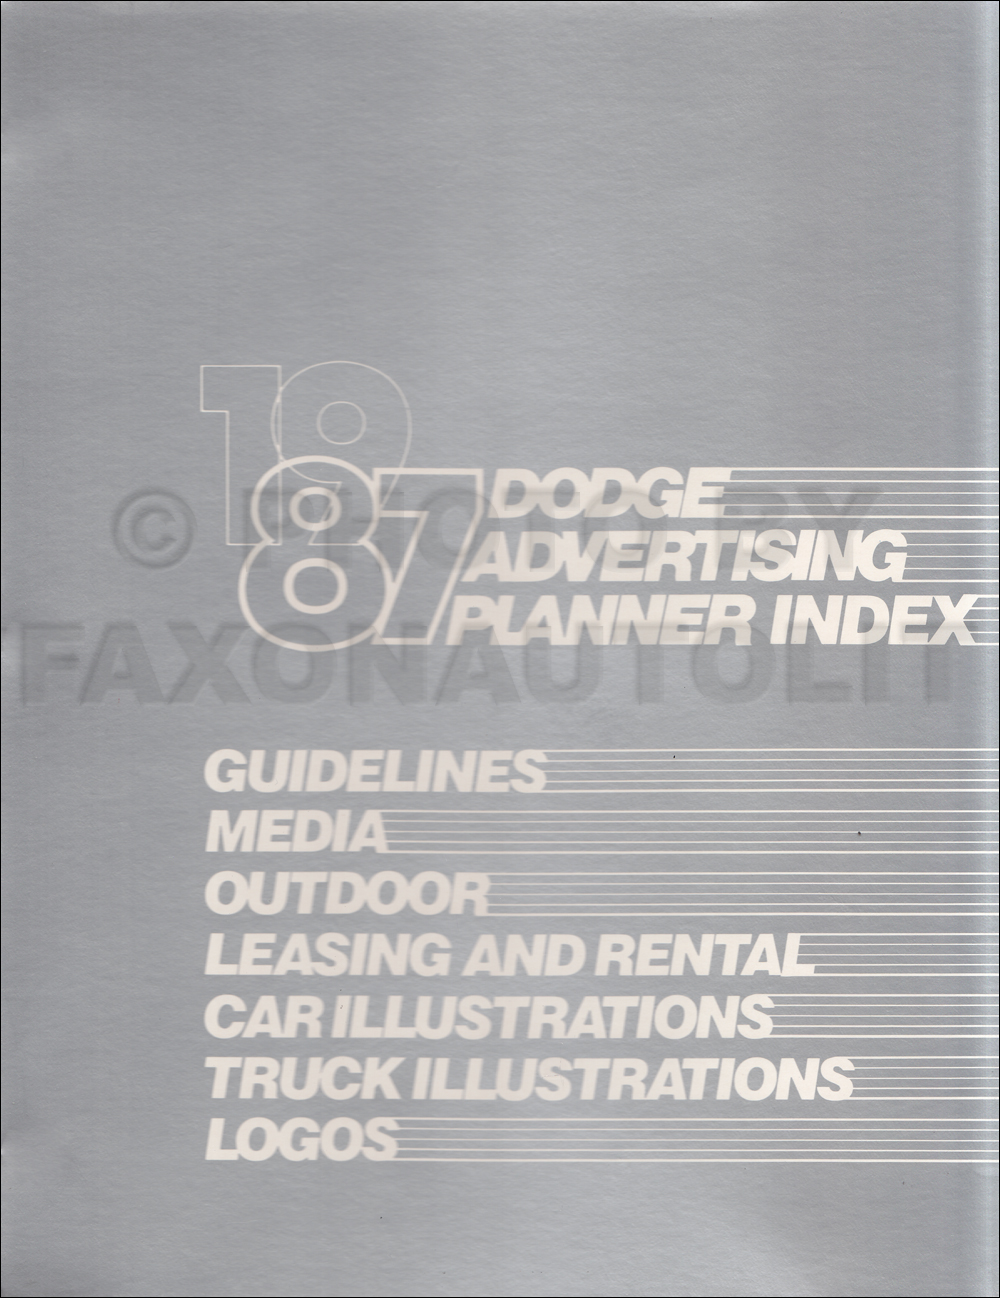 1987 Dodge Dealer Advertising Planner Original